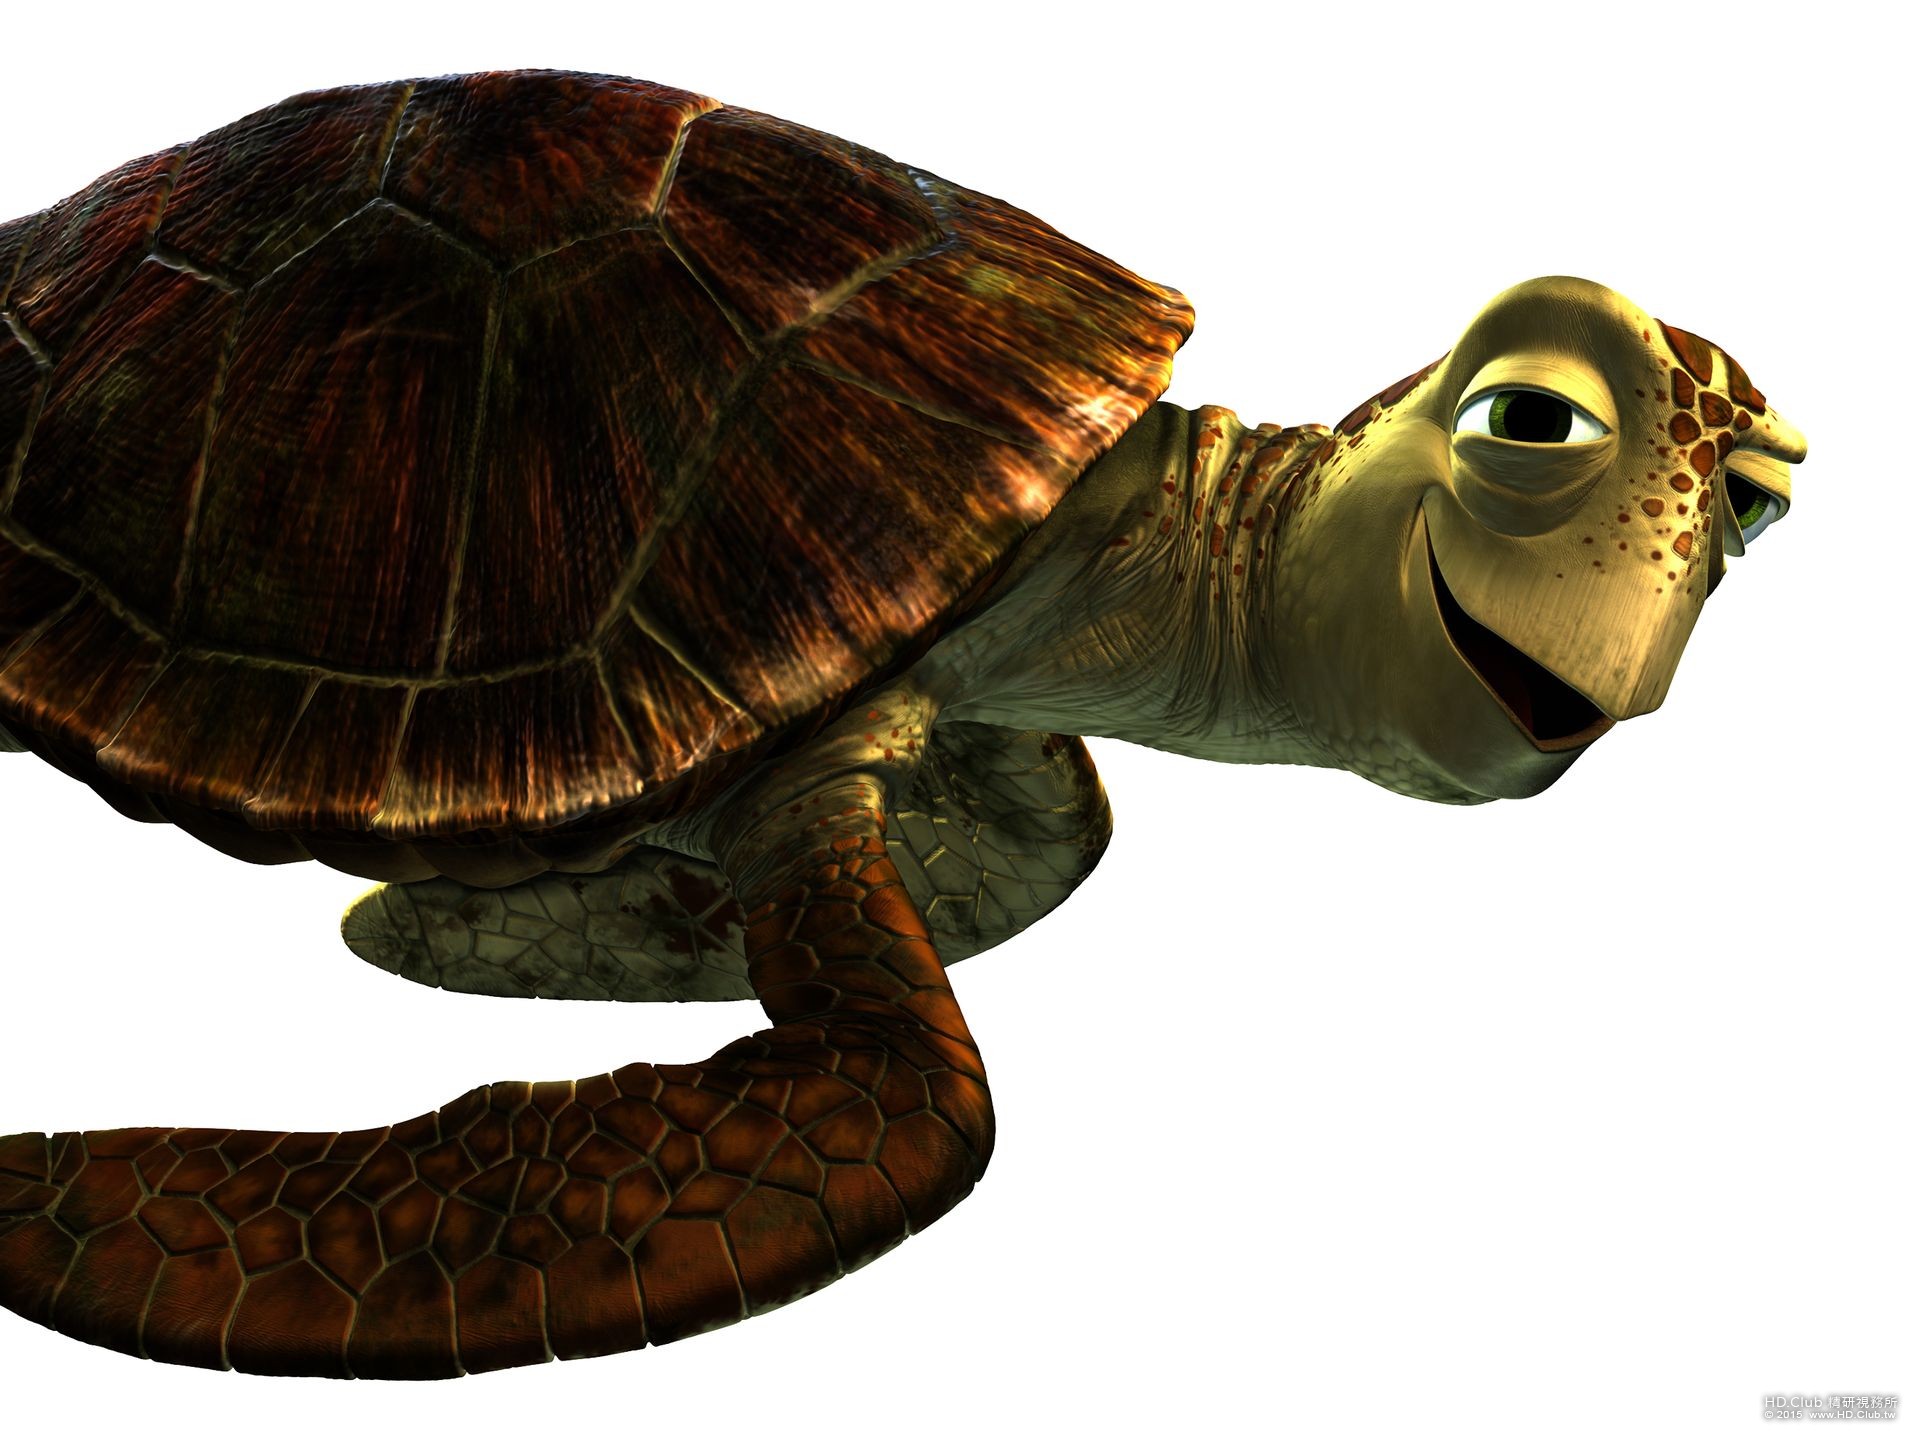 finding-dory-crush-andrew-stanton-sea-turtle.jpg